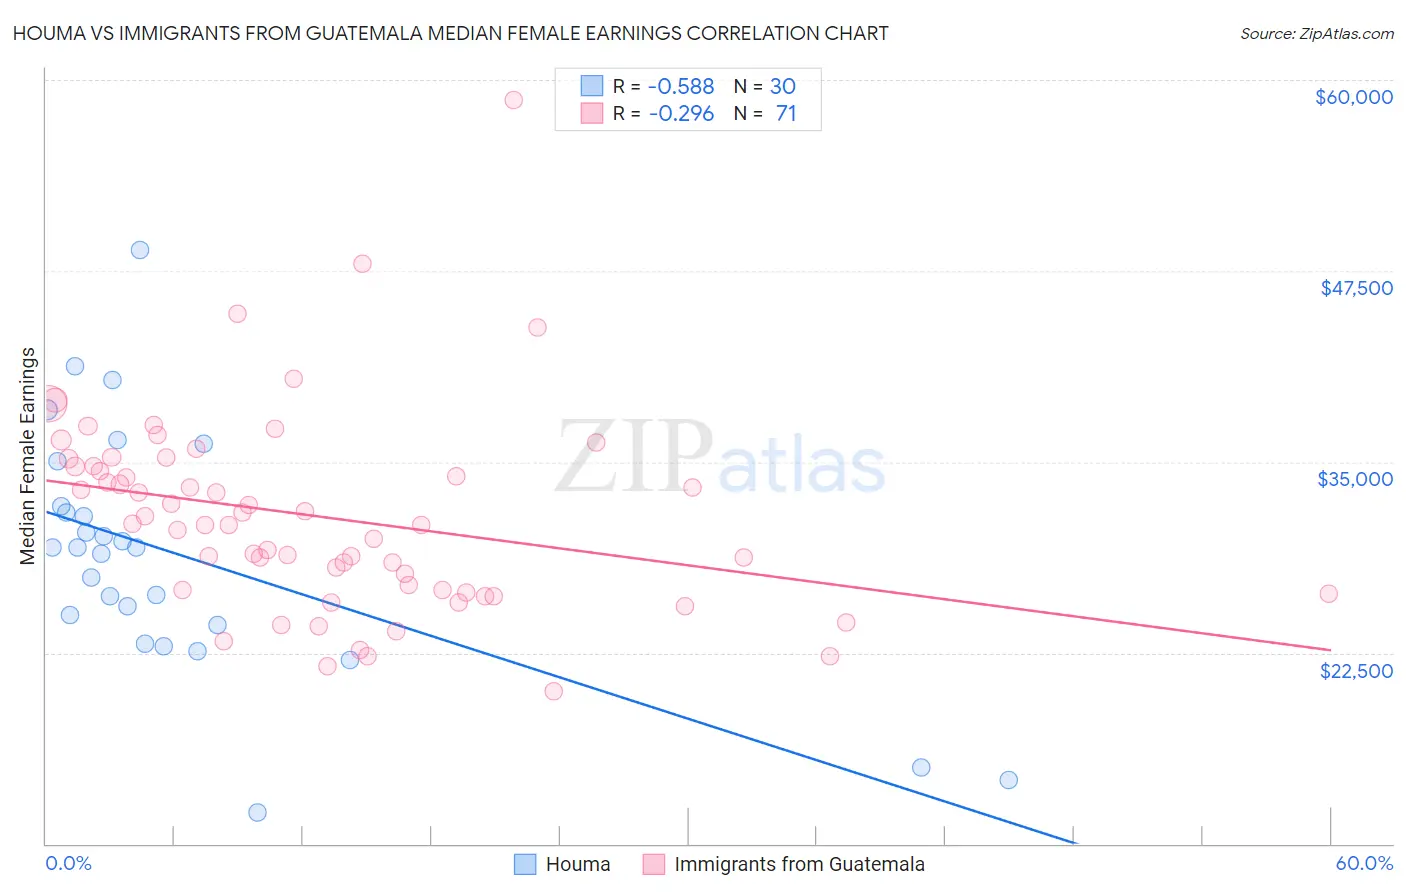 Houma vs Immigrants from Guatemala Median Female Earnings